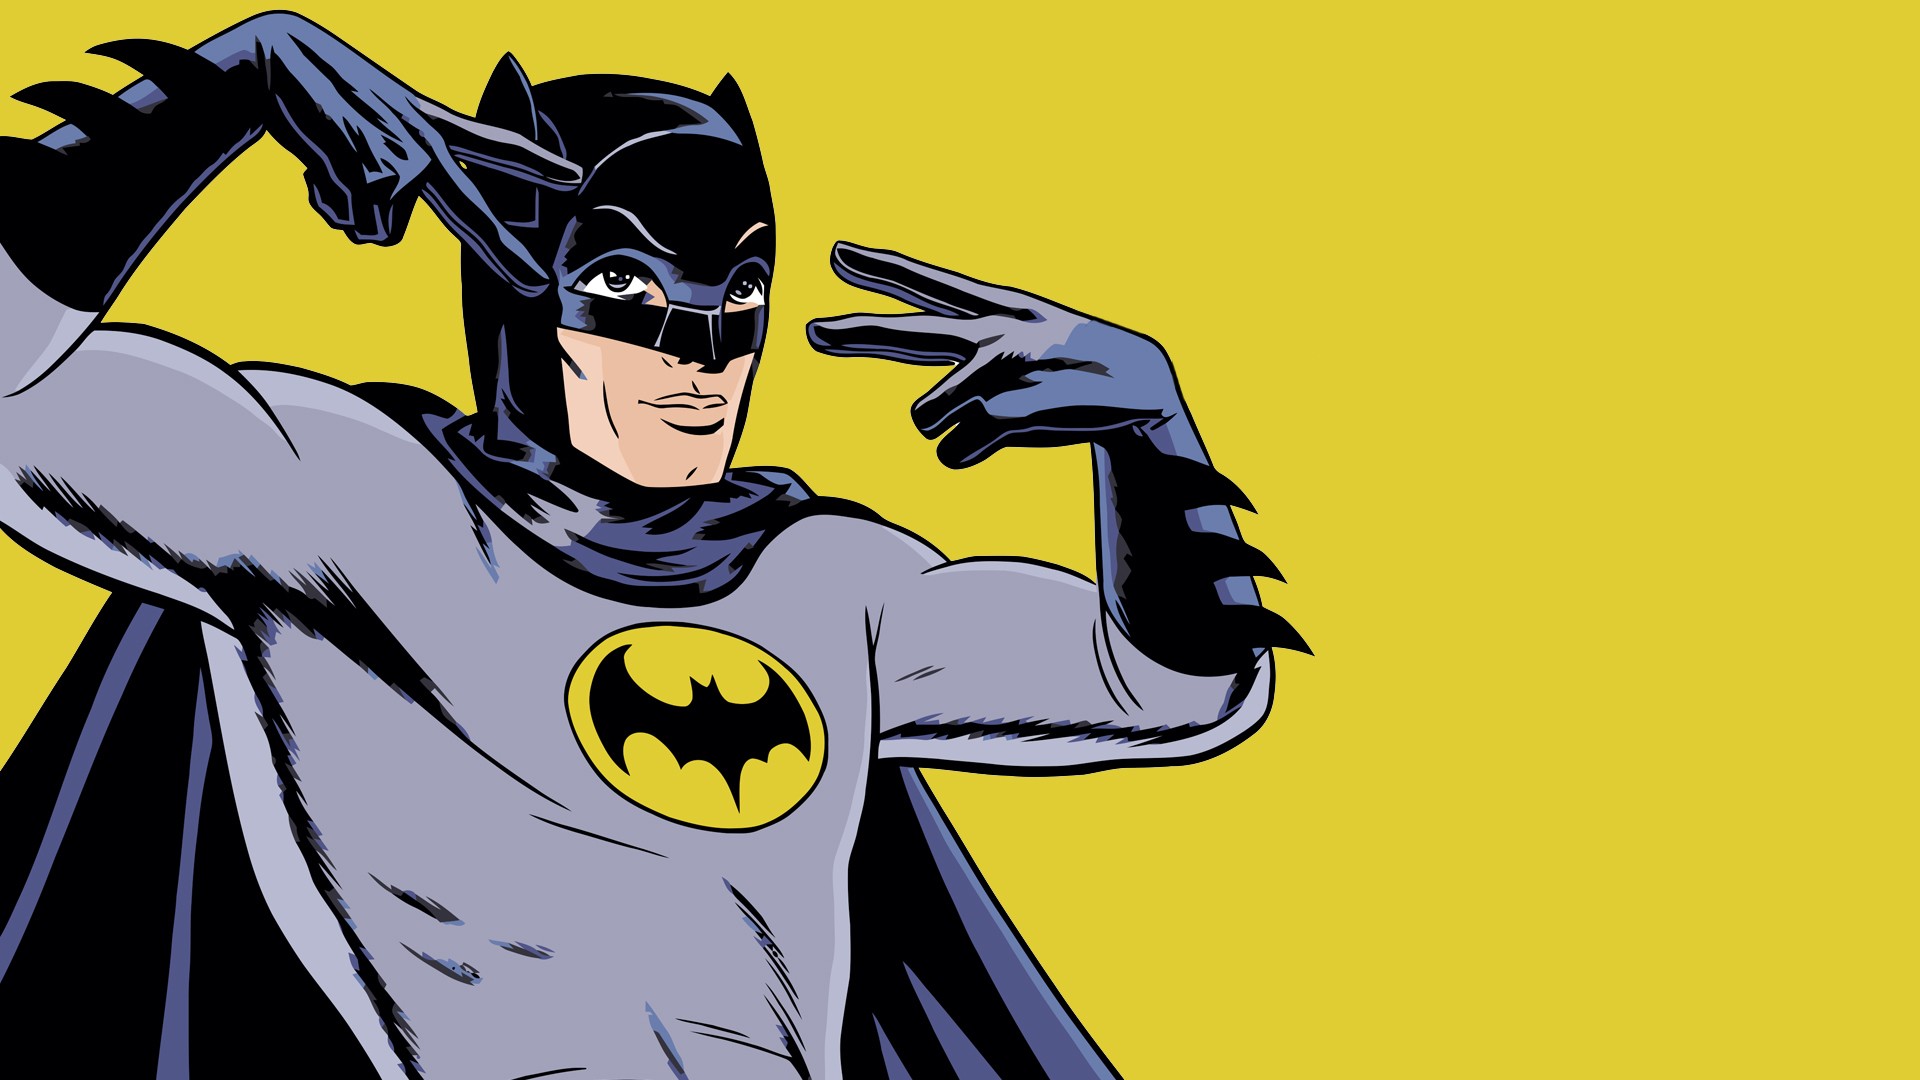 General 1920x1080 comics Batman Bruce Wayne digital art simple background cape yellow background smiling peace sign gloves Batman logo face mask